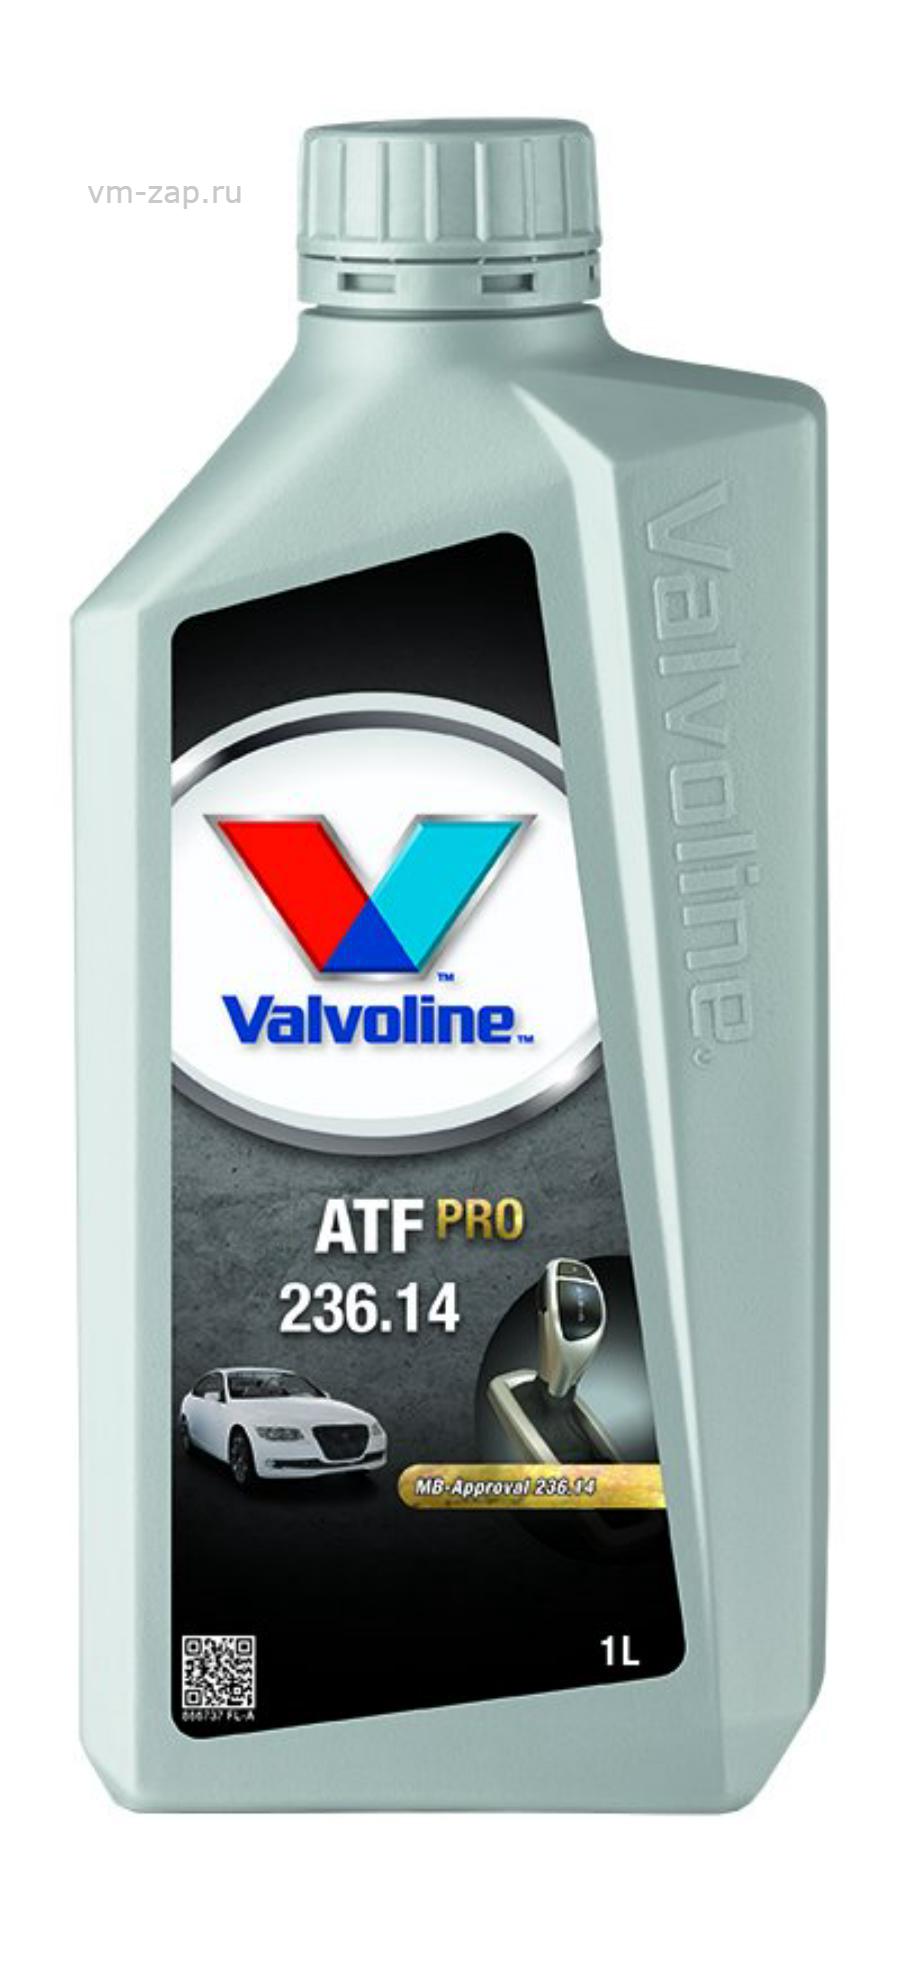 Atf pro. Valvoline ATF 1л 866885. Valvoline ATF Dex Merc. 872373 Valvoline. Valvoline Light Heavy Duty ATF CVT.